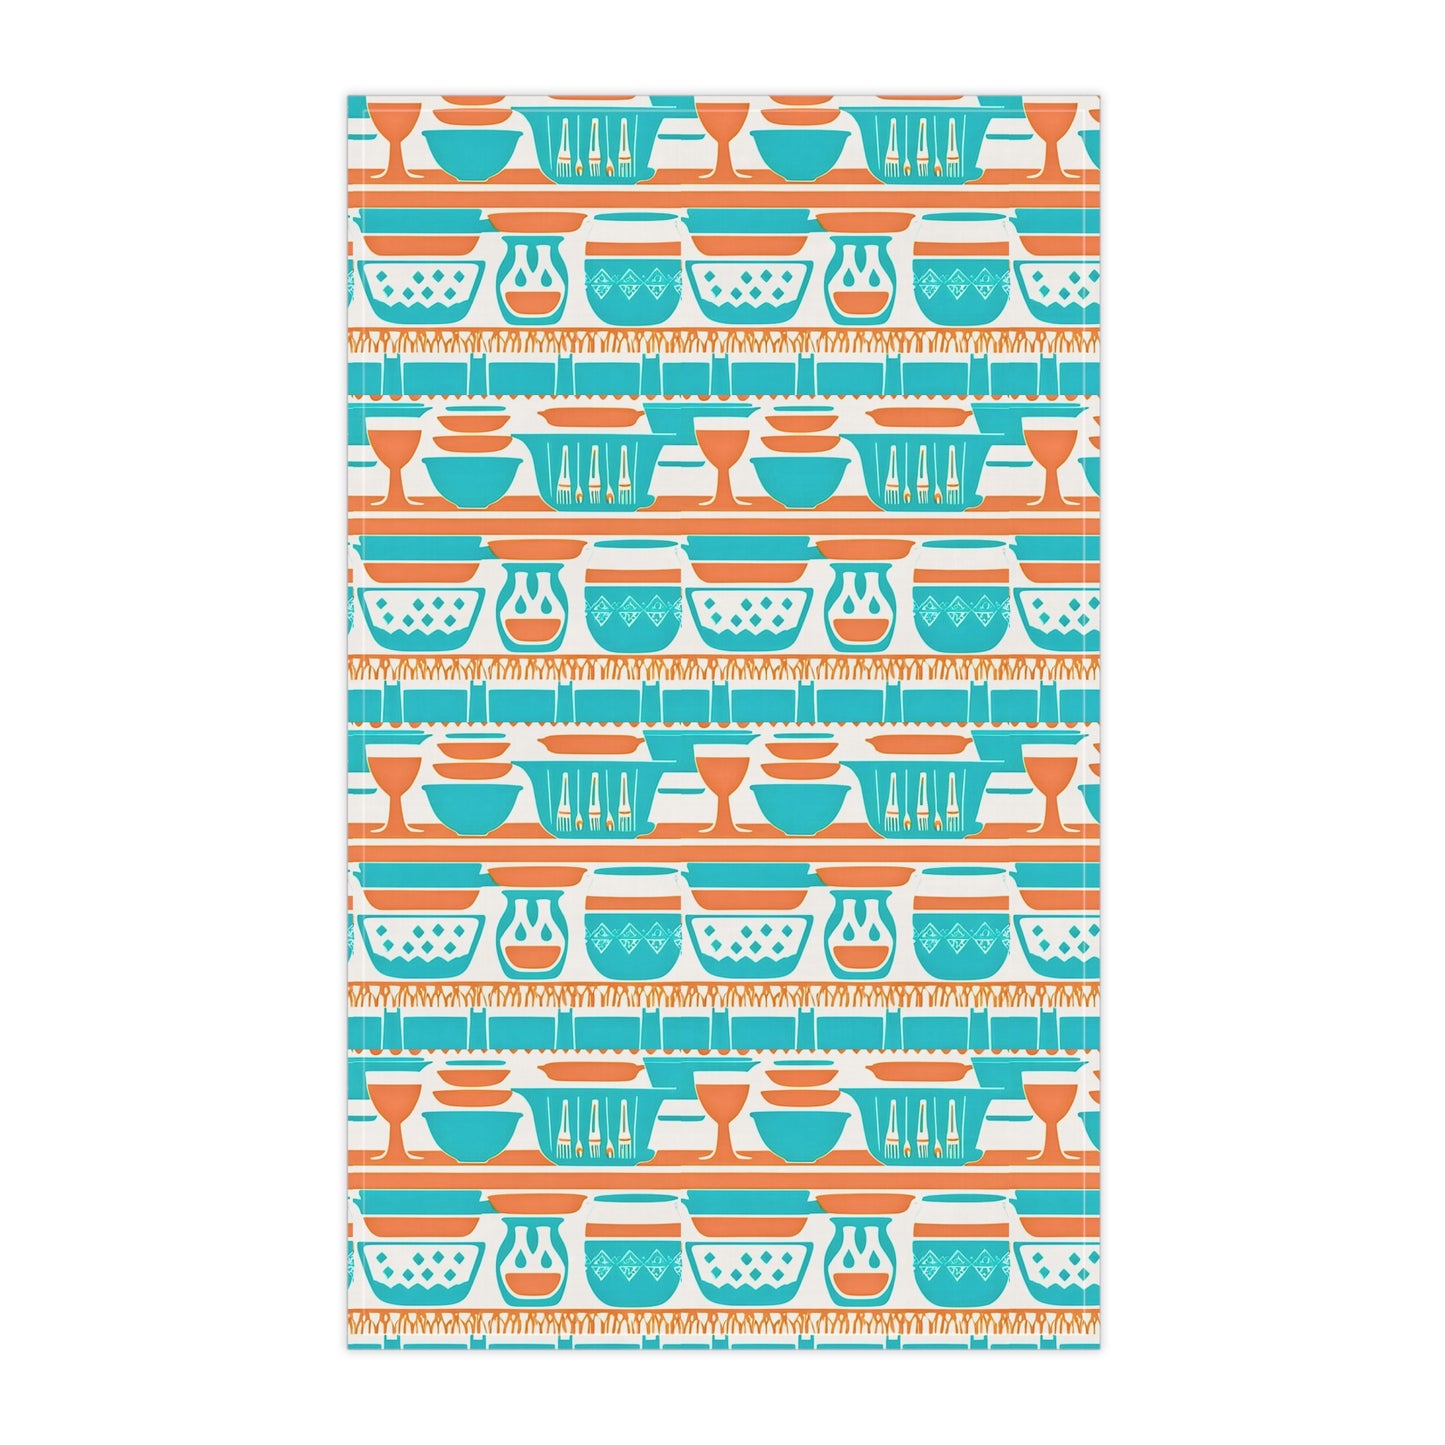 Thrift Store Midcentury Modern Retro Casserole Dishes Decorative Kitchen Tea Towel/Bar Towel